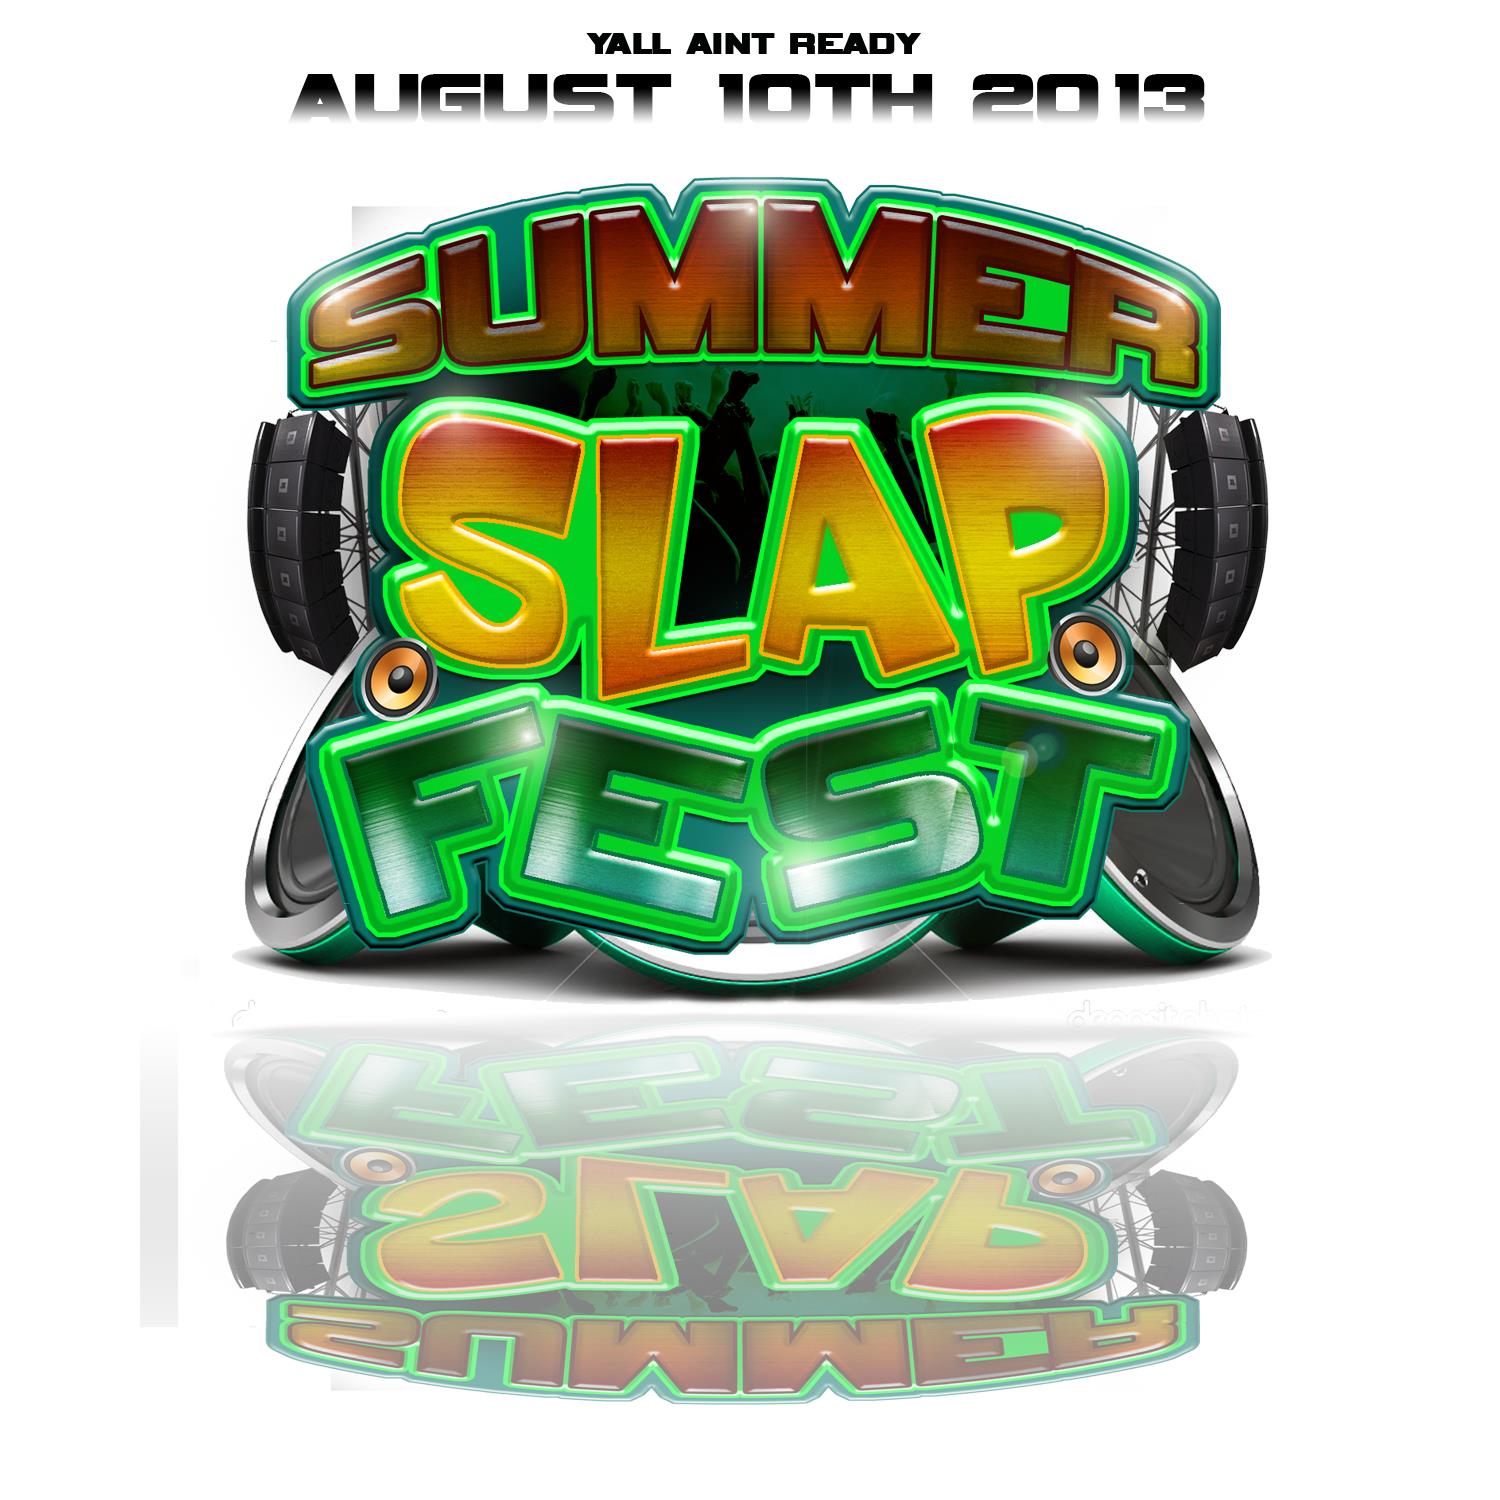 Buy Tickets to Summer Slap Fest in Tracy